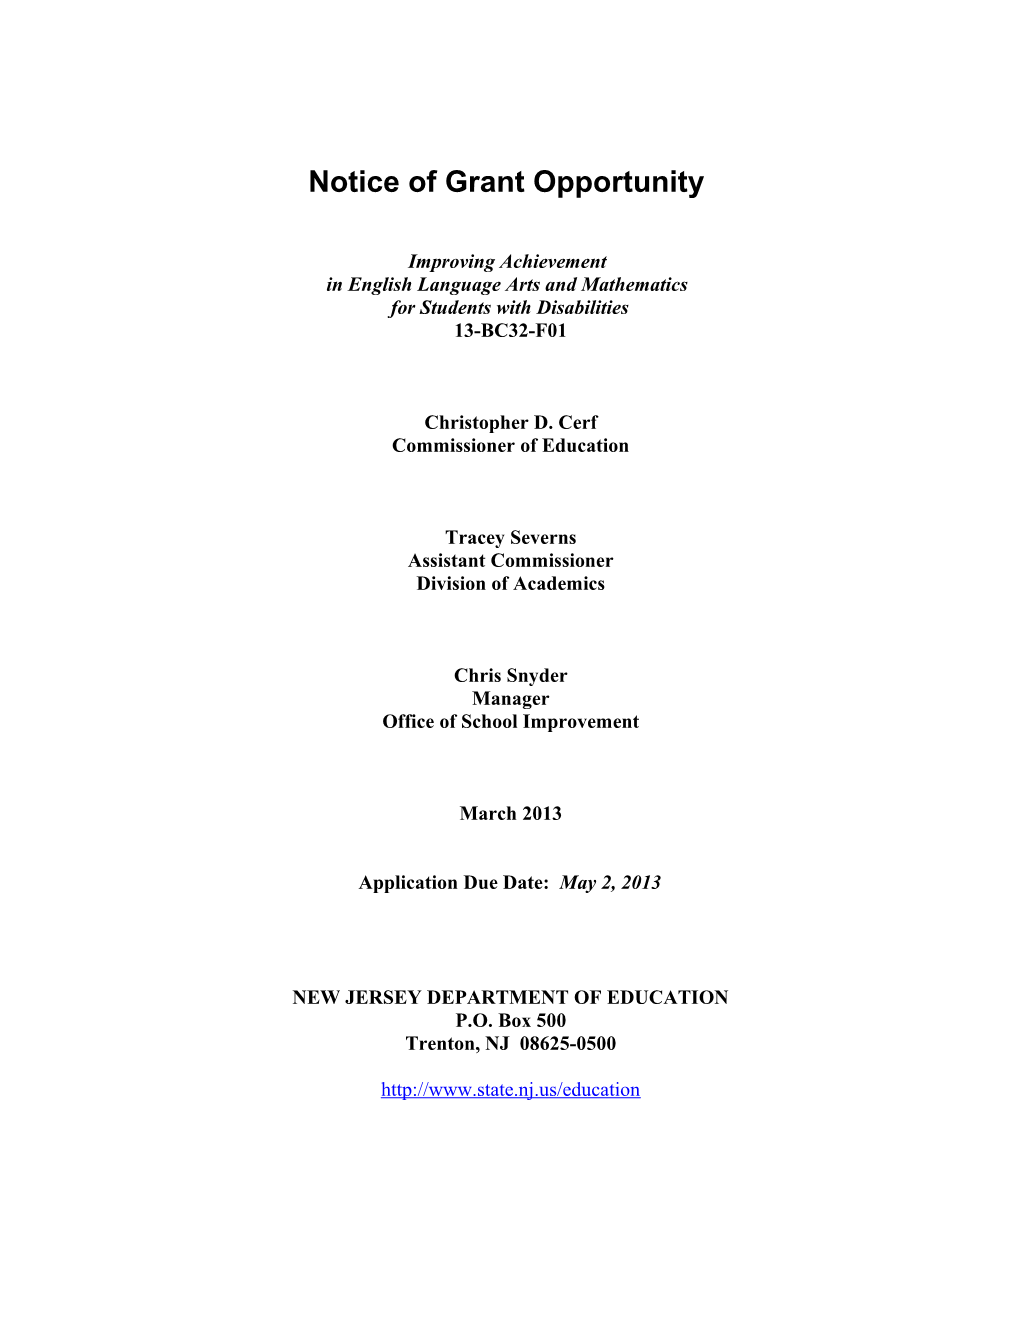 Section Ii: Grant Program Information